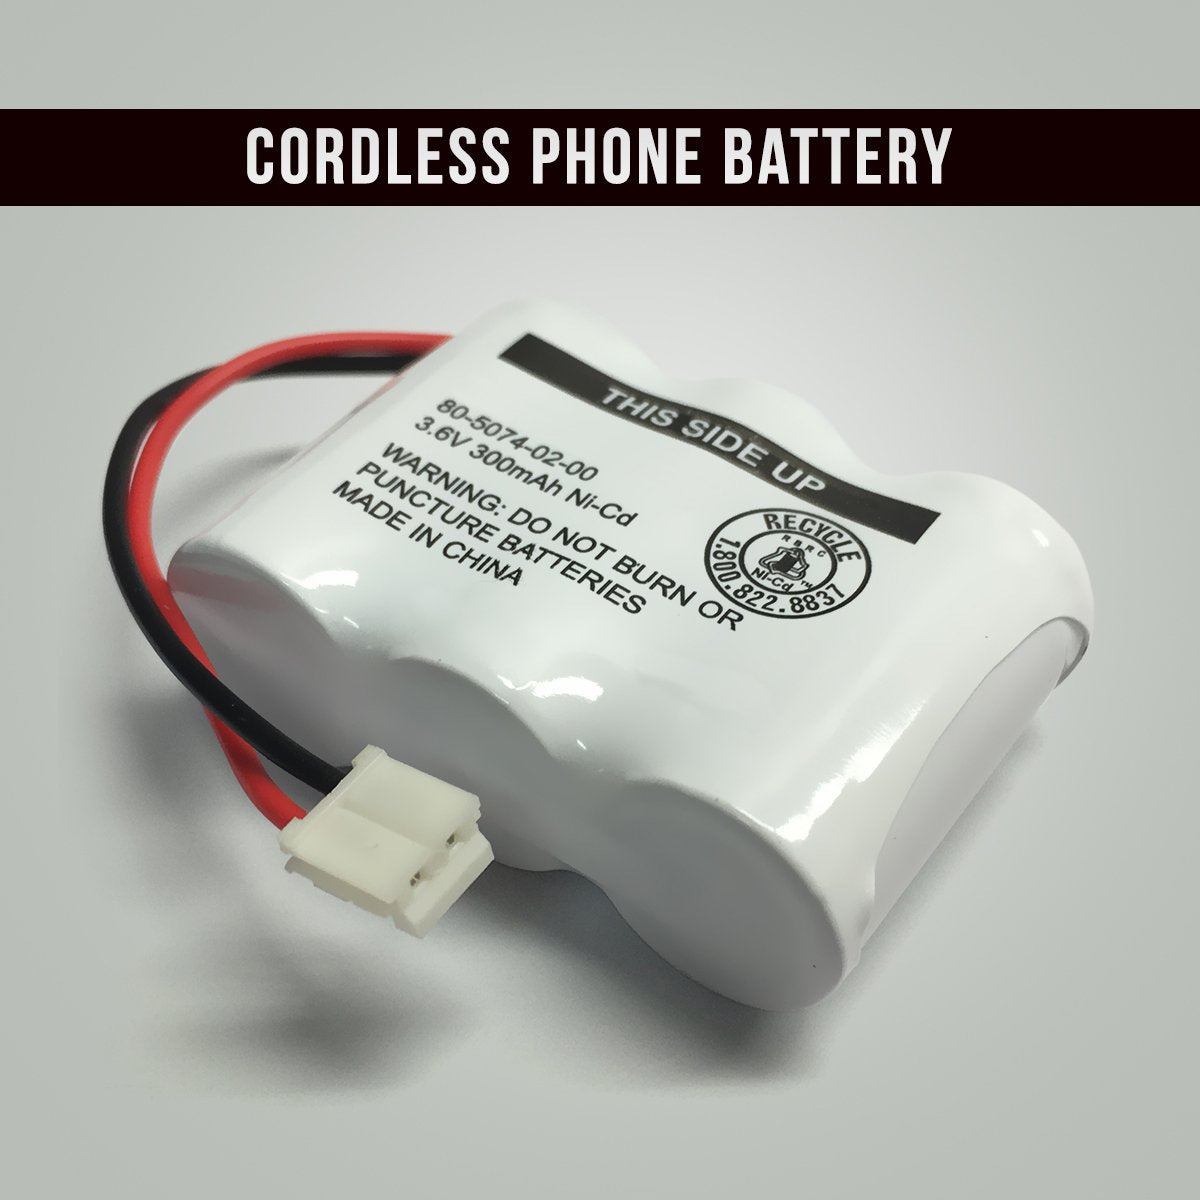 Sharp FT-4350 Cordless Phone Battery